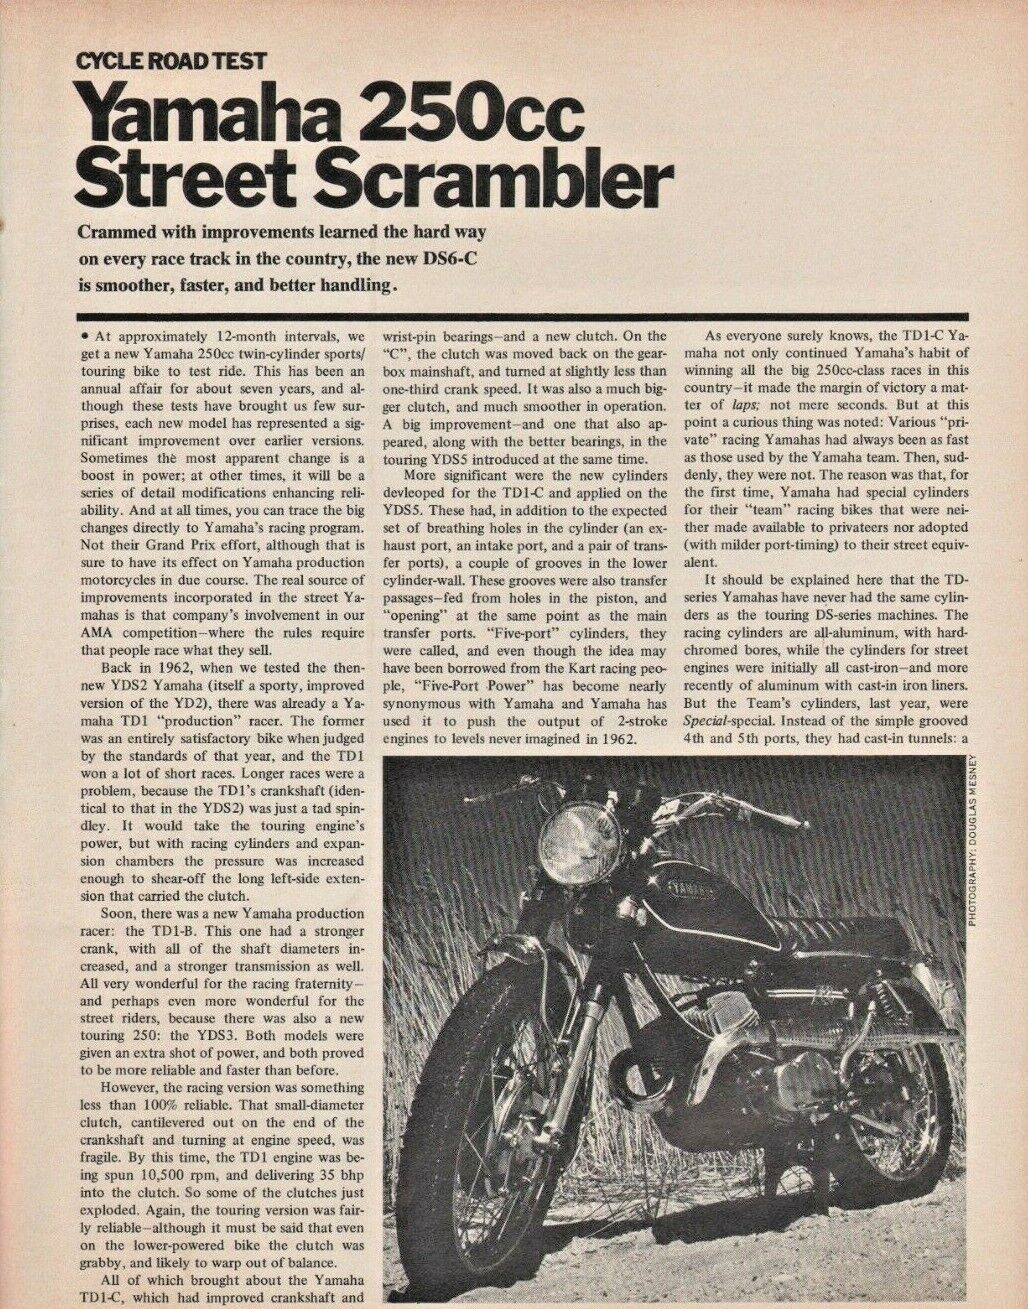 1969 Yamaha 250cc Street Scrambler - 4-Page Vintage Motorcycle Road Test Article